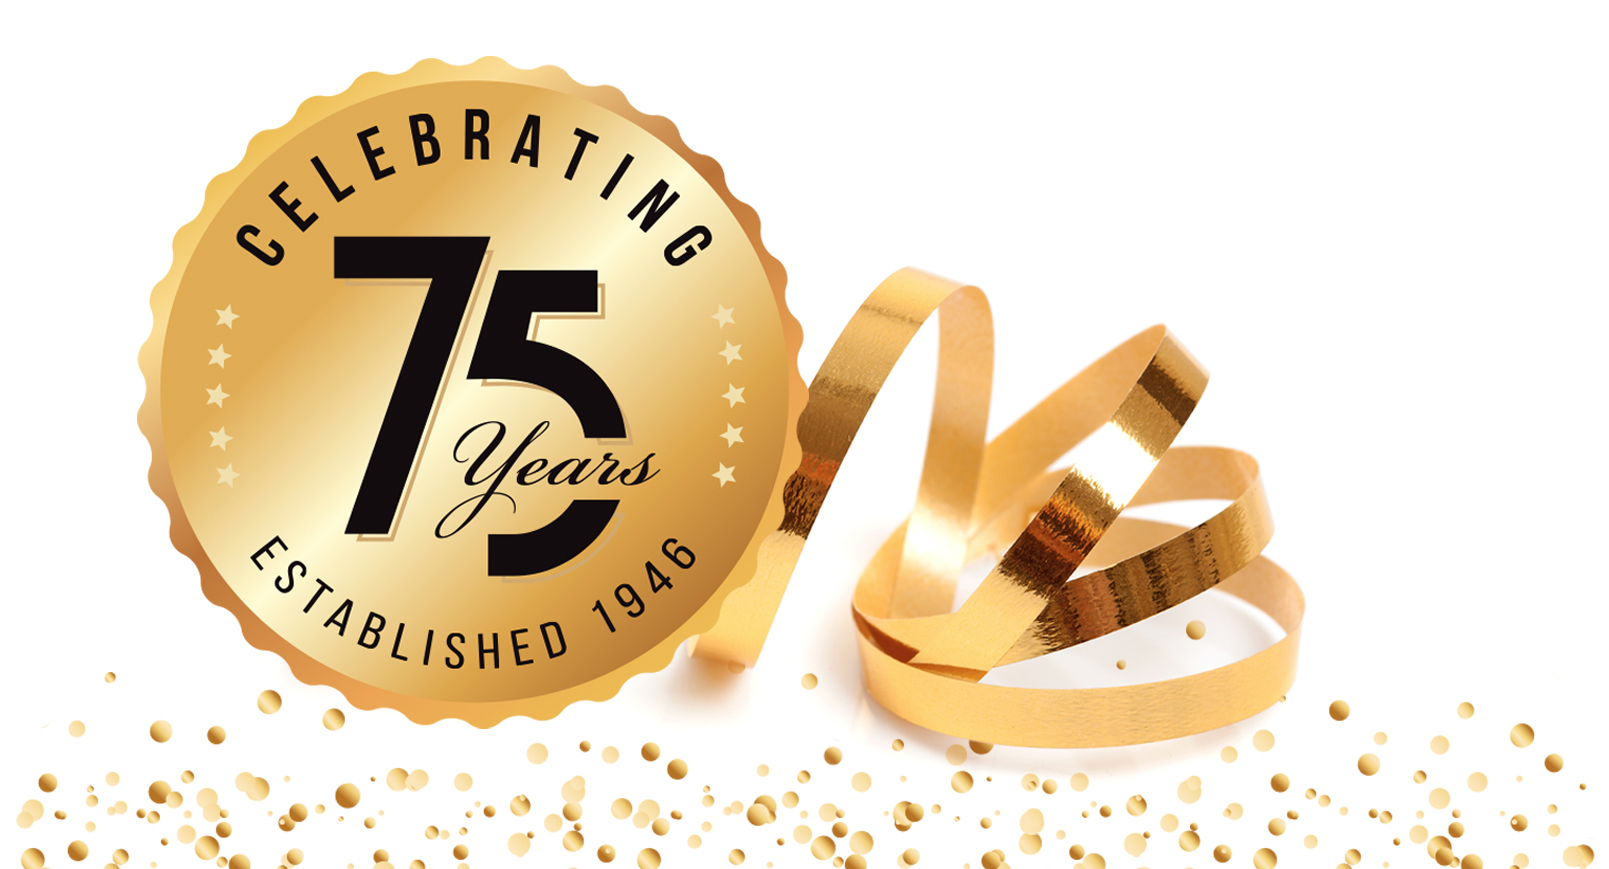 Catelli Brothers Marks 75th Anniversary Milestone